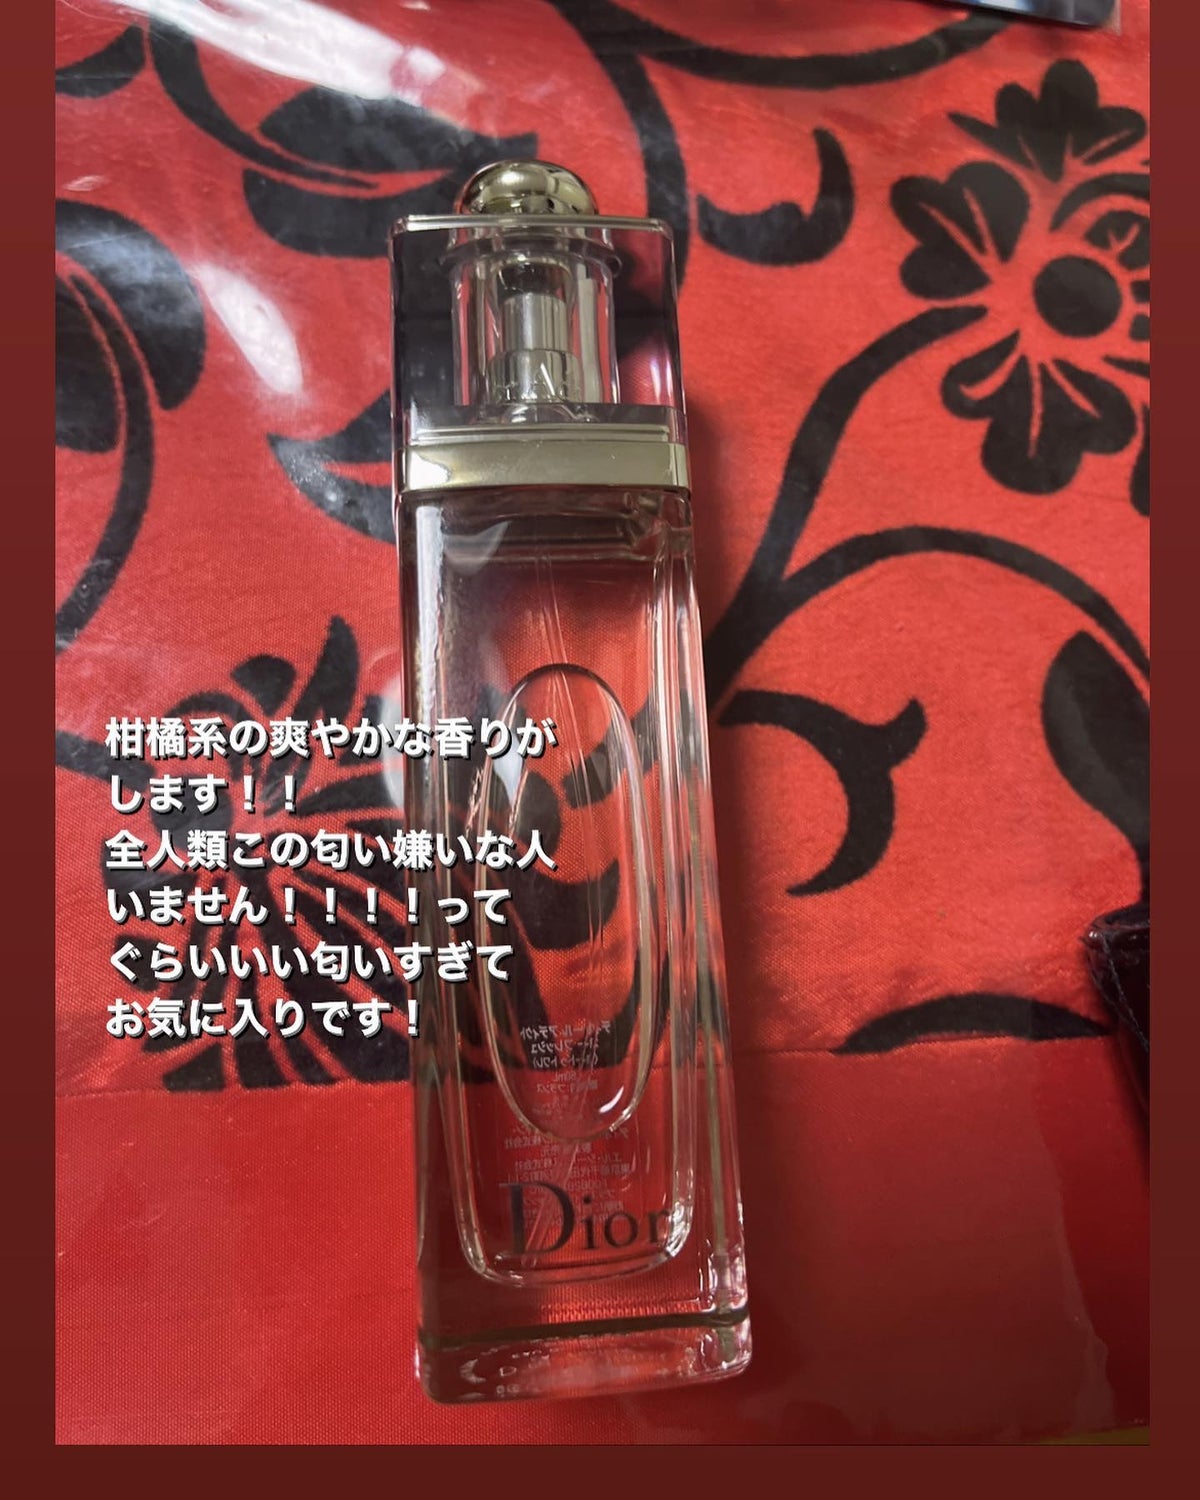 Dior アディクト オーフレッシュ 100ml EDT 香水 人気ブランド多数対象